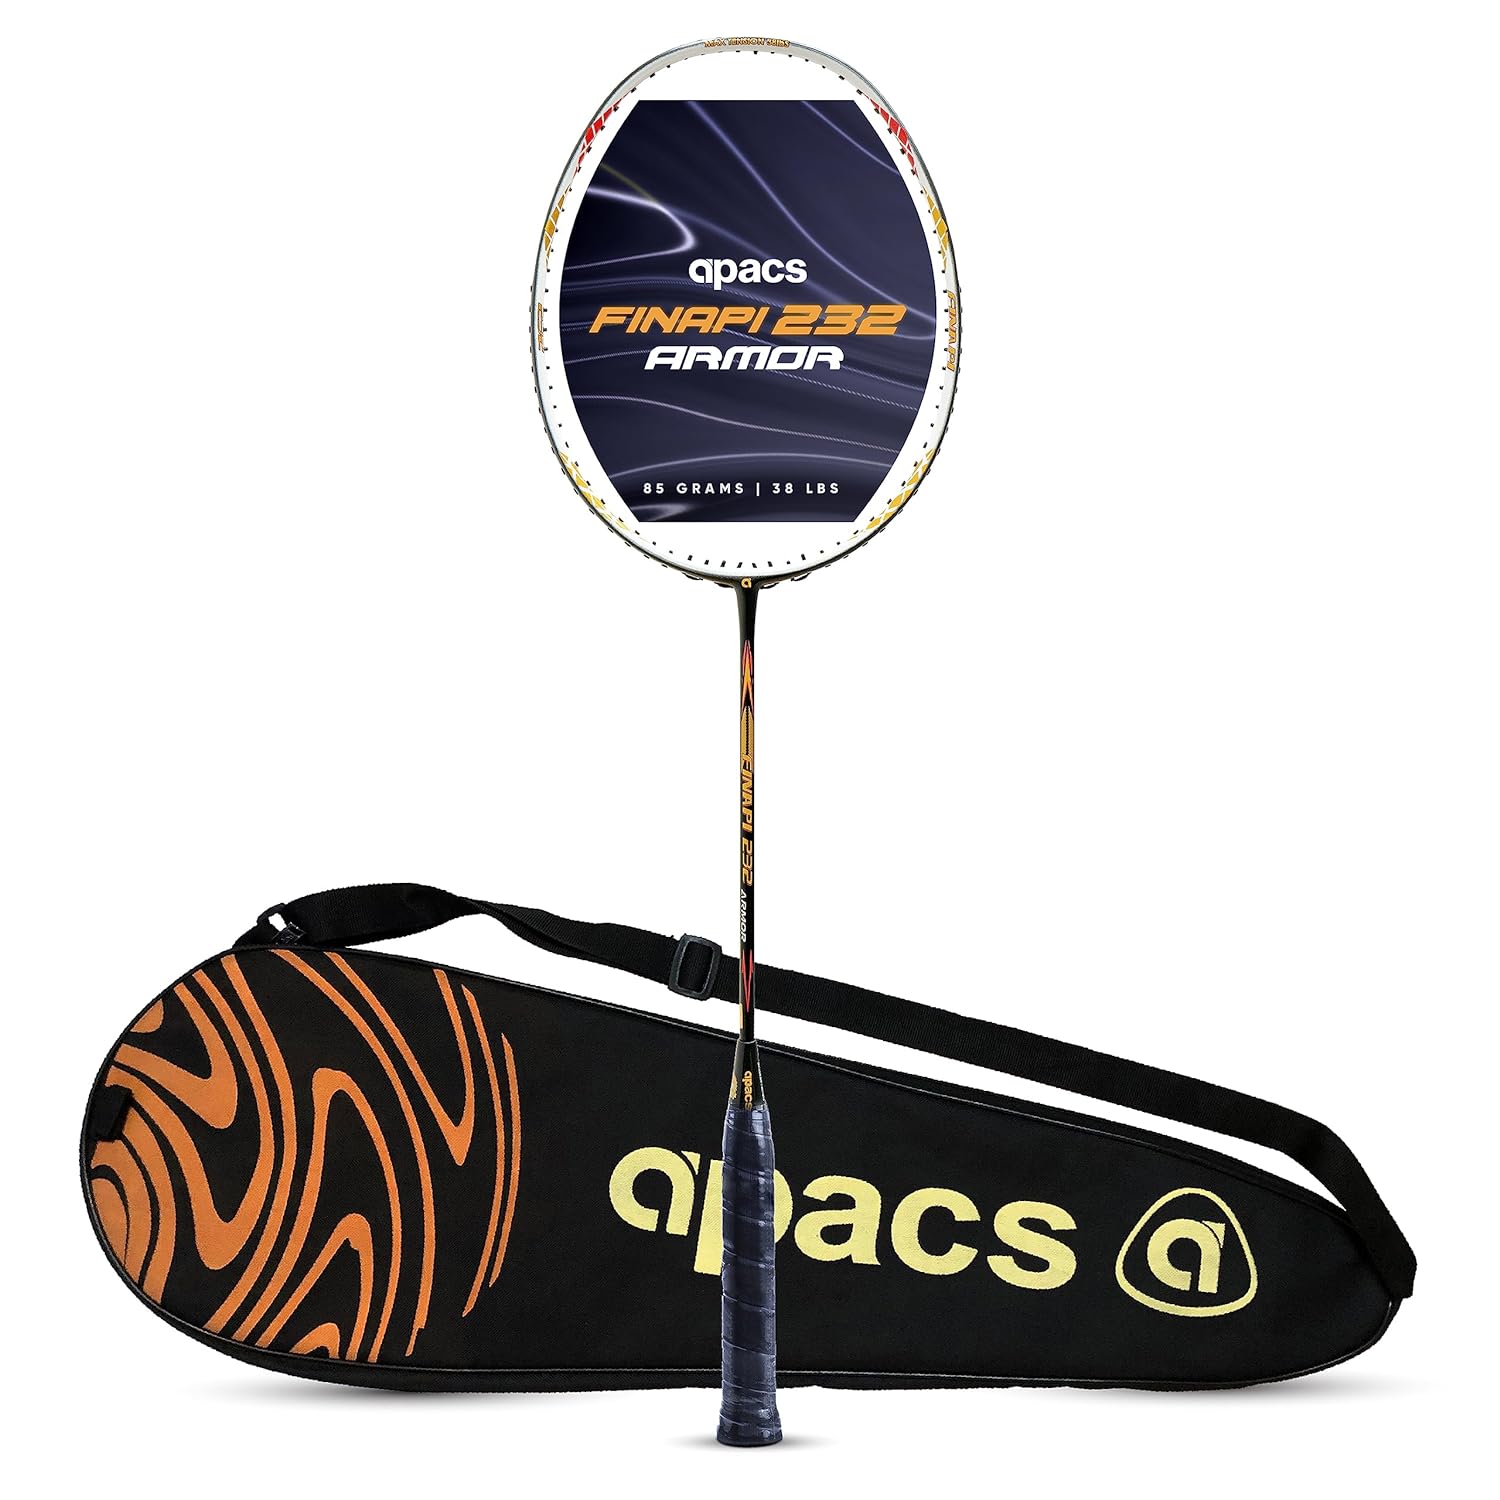 Apacs FINAPI 232 Graphite Badminton Racket